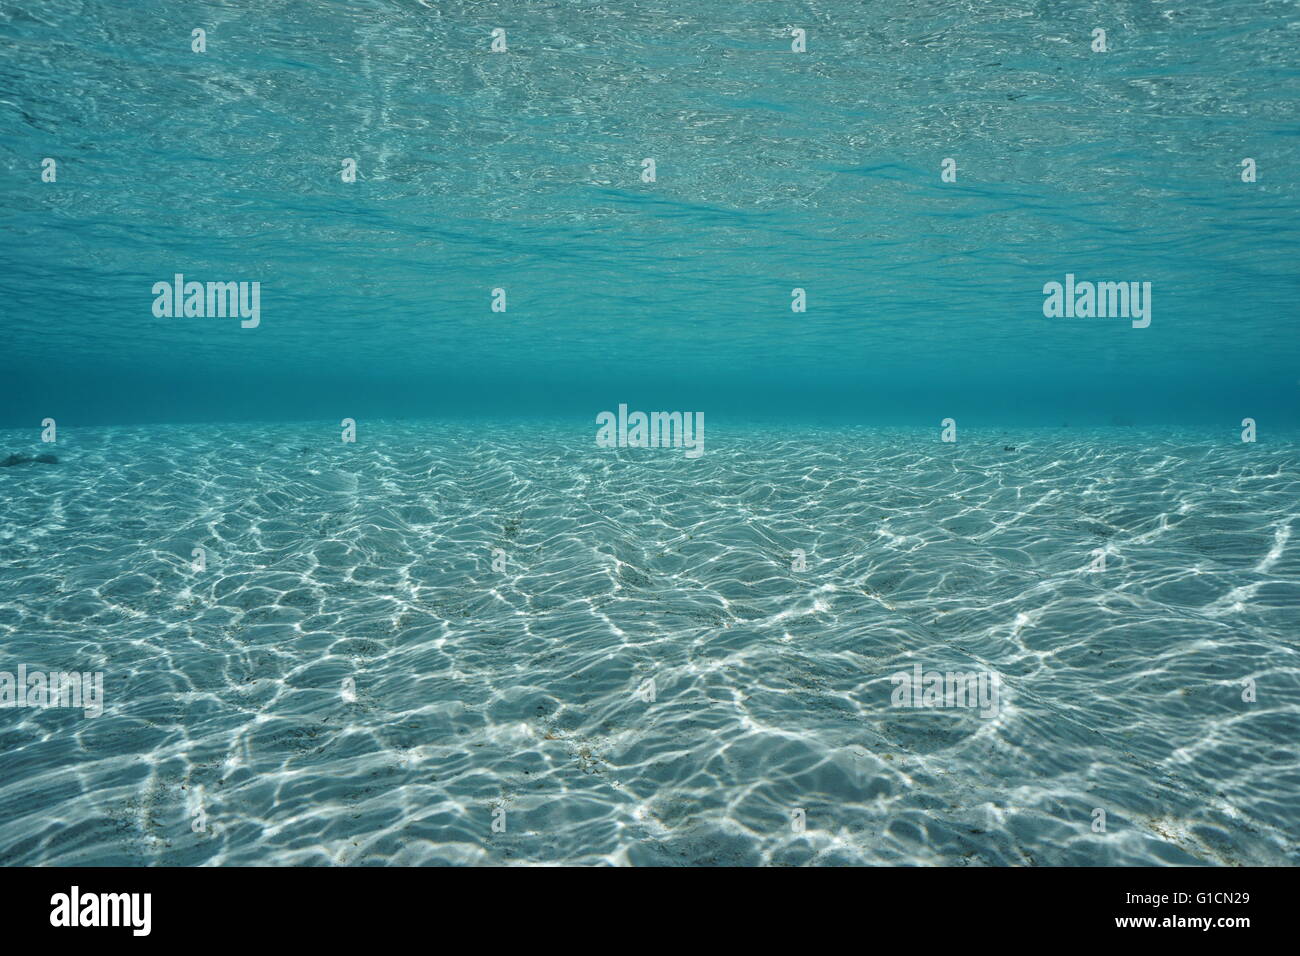 Subacquea sabbiose poco profondo oceano pavimento con acqua di superficie, scenario naturale, oceano pacifico, Polinesia Francese Foto Stock